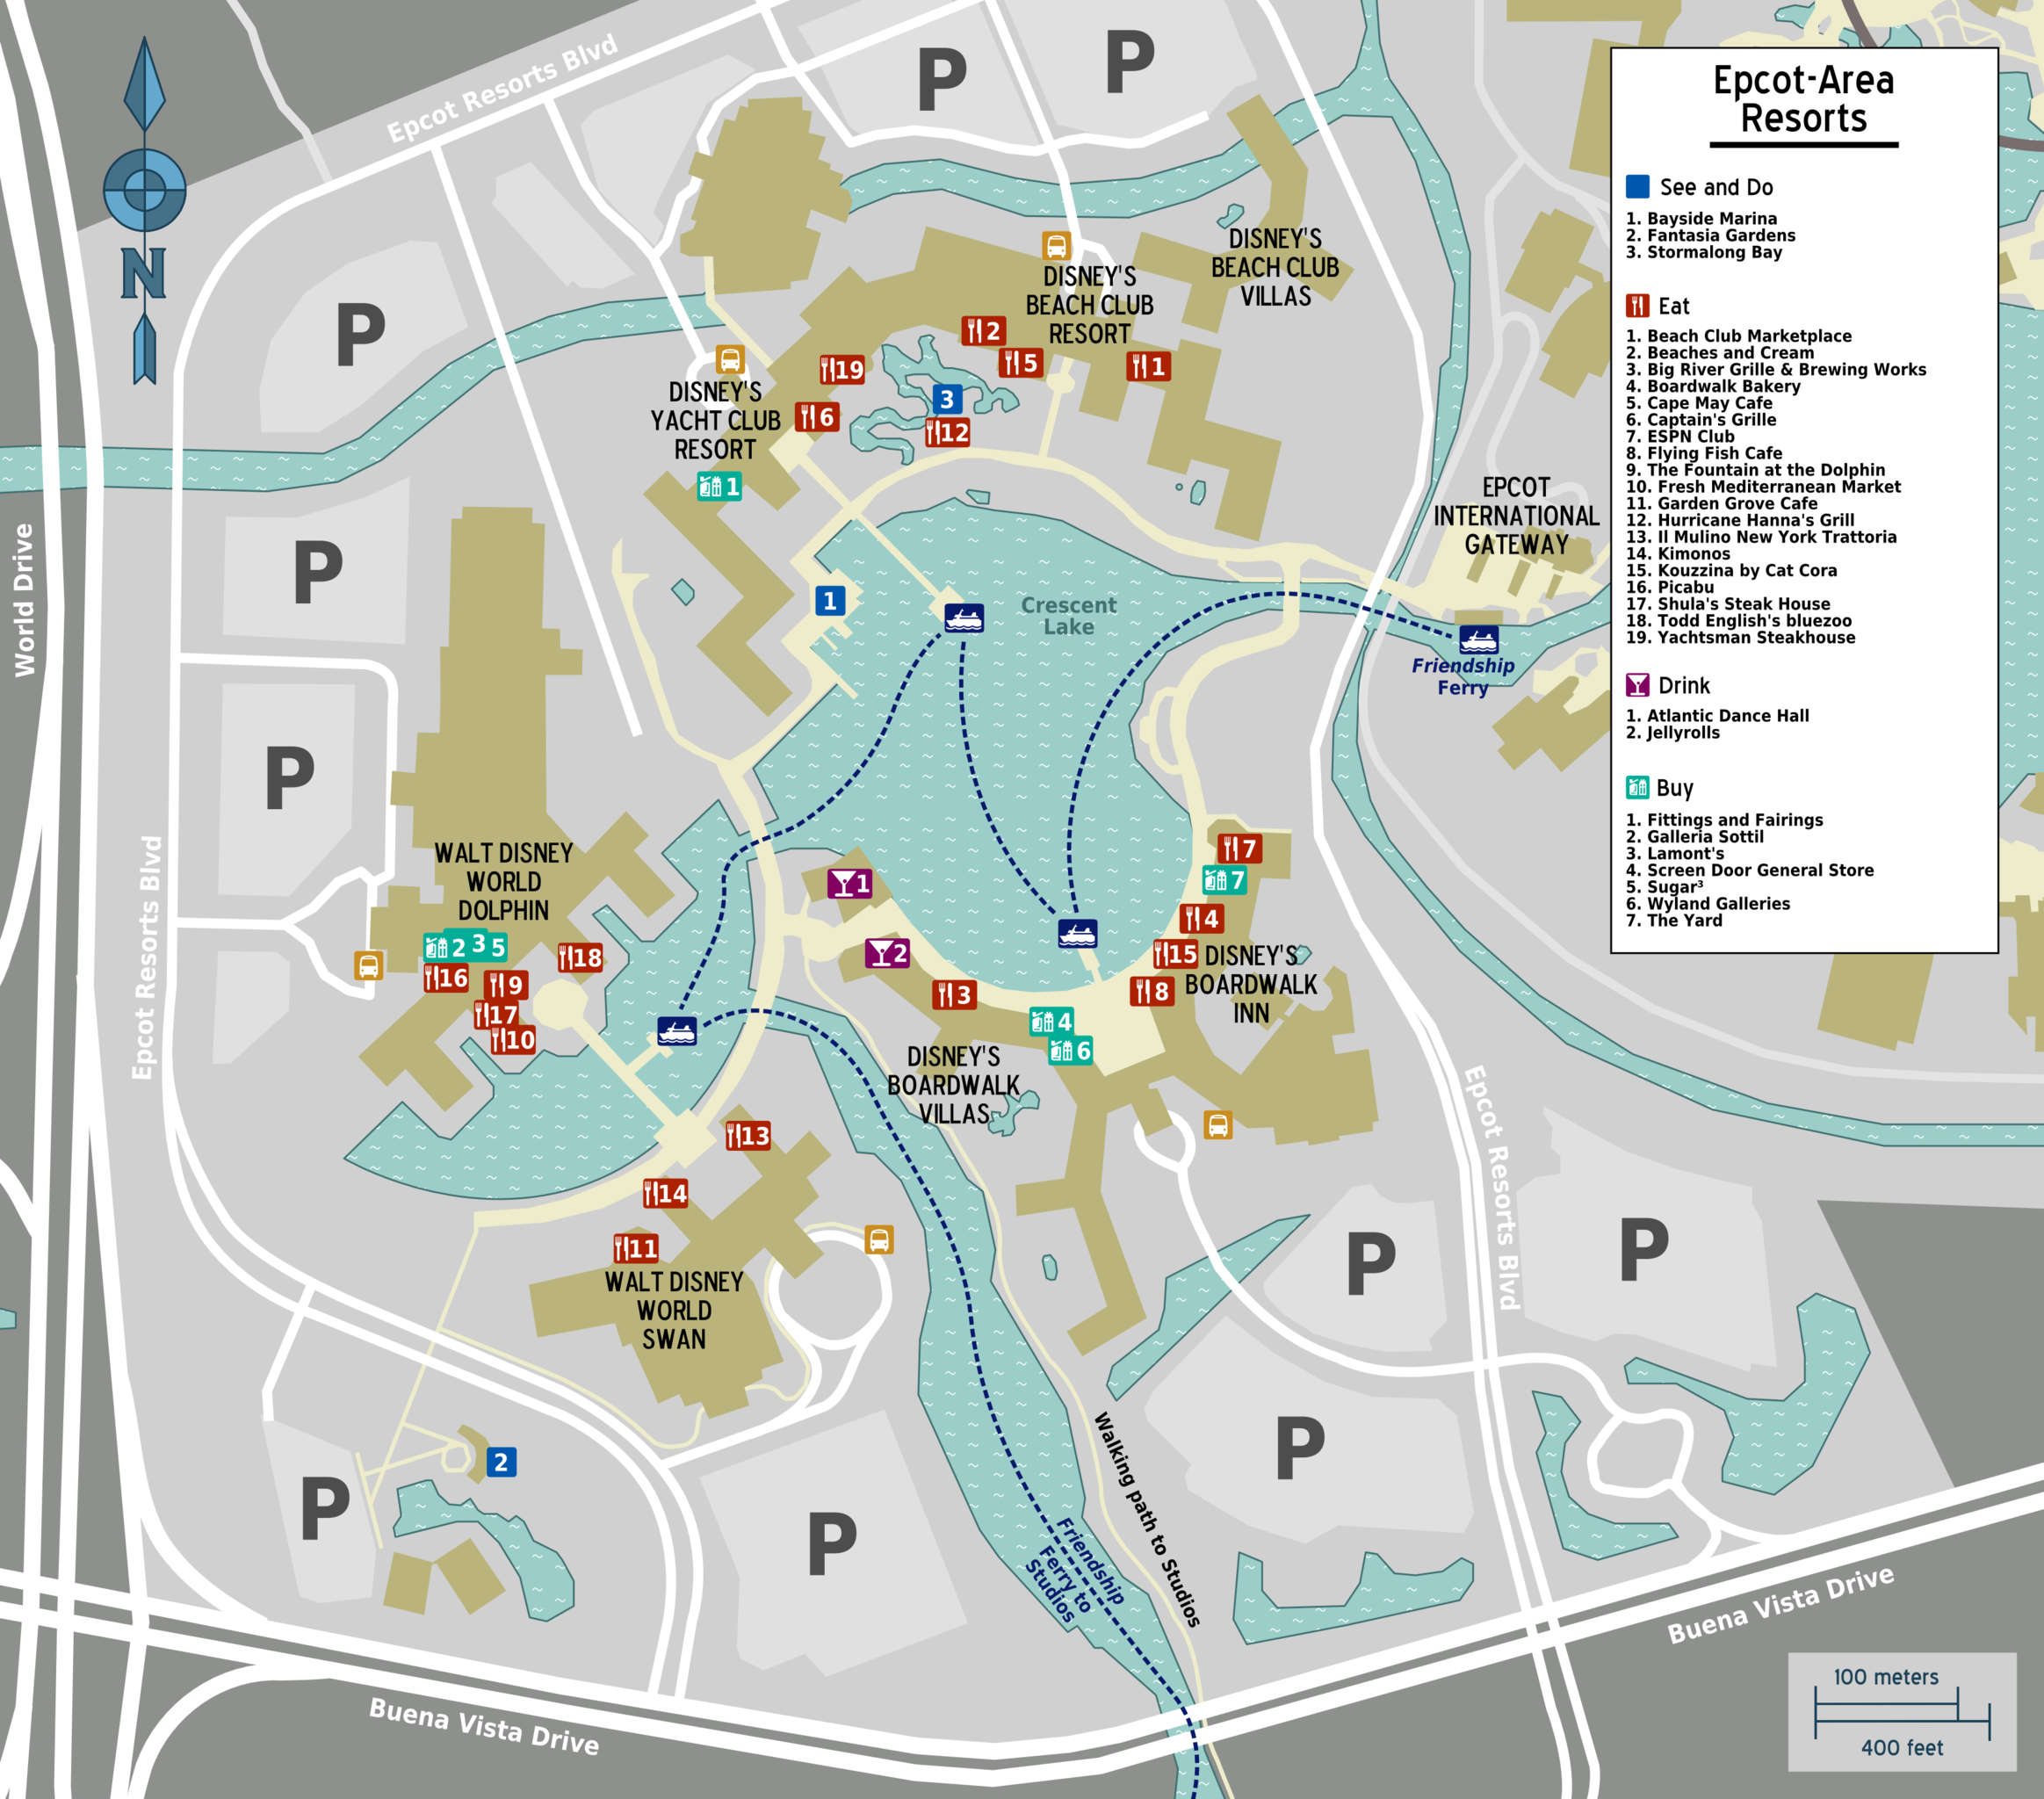 2327px-Map_-_Walt_Disney_World_-_Epcot_-_resorts.png